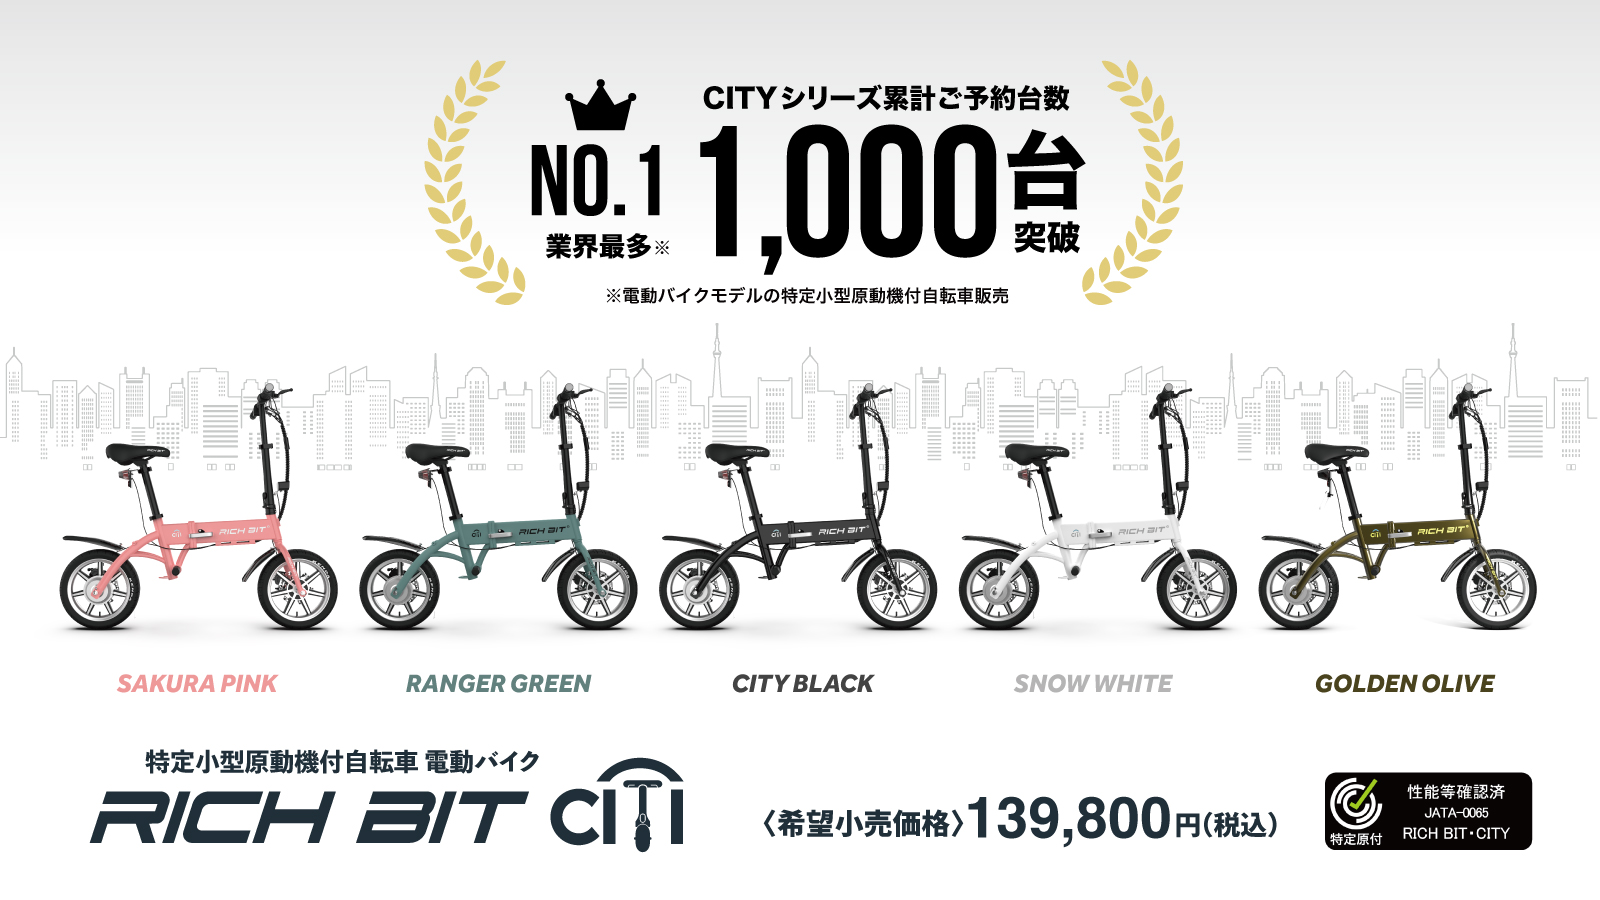 特定小型原動機付自転車区分の「RICHIBIT」シリーズ２機種、国内累計販売台数10,000台突破のサブ画像3